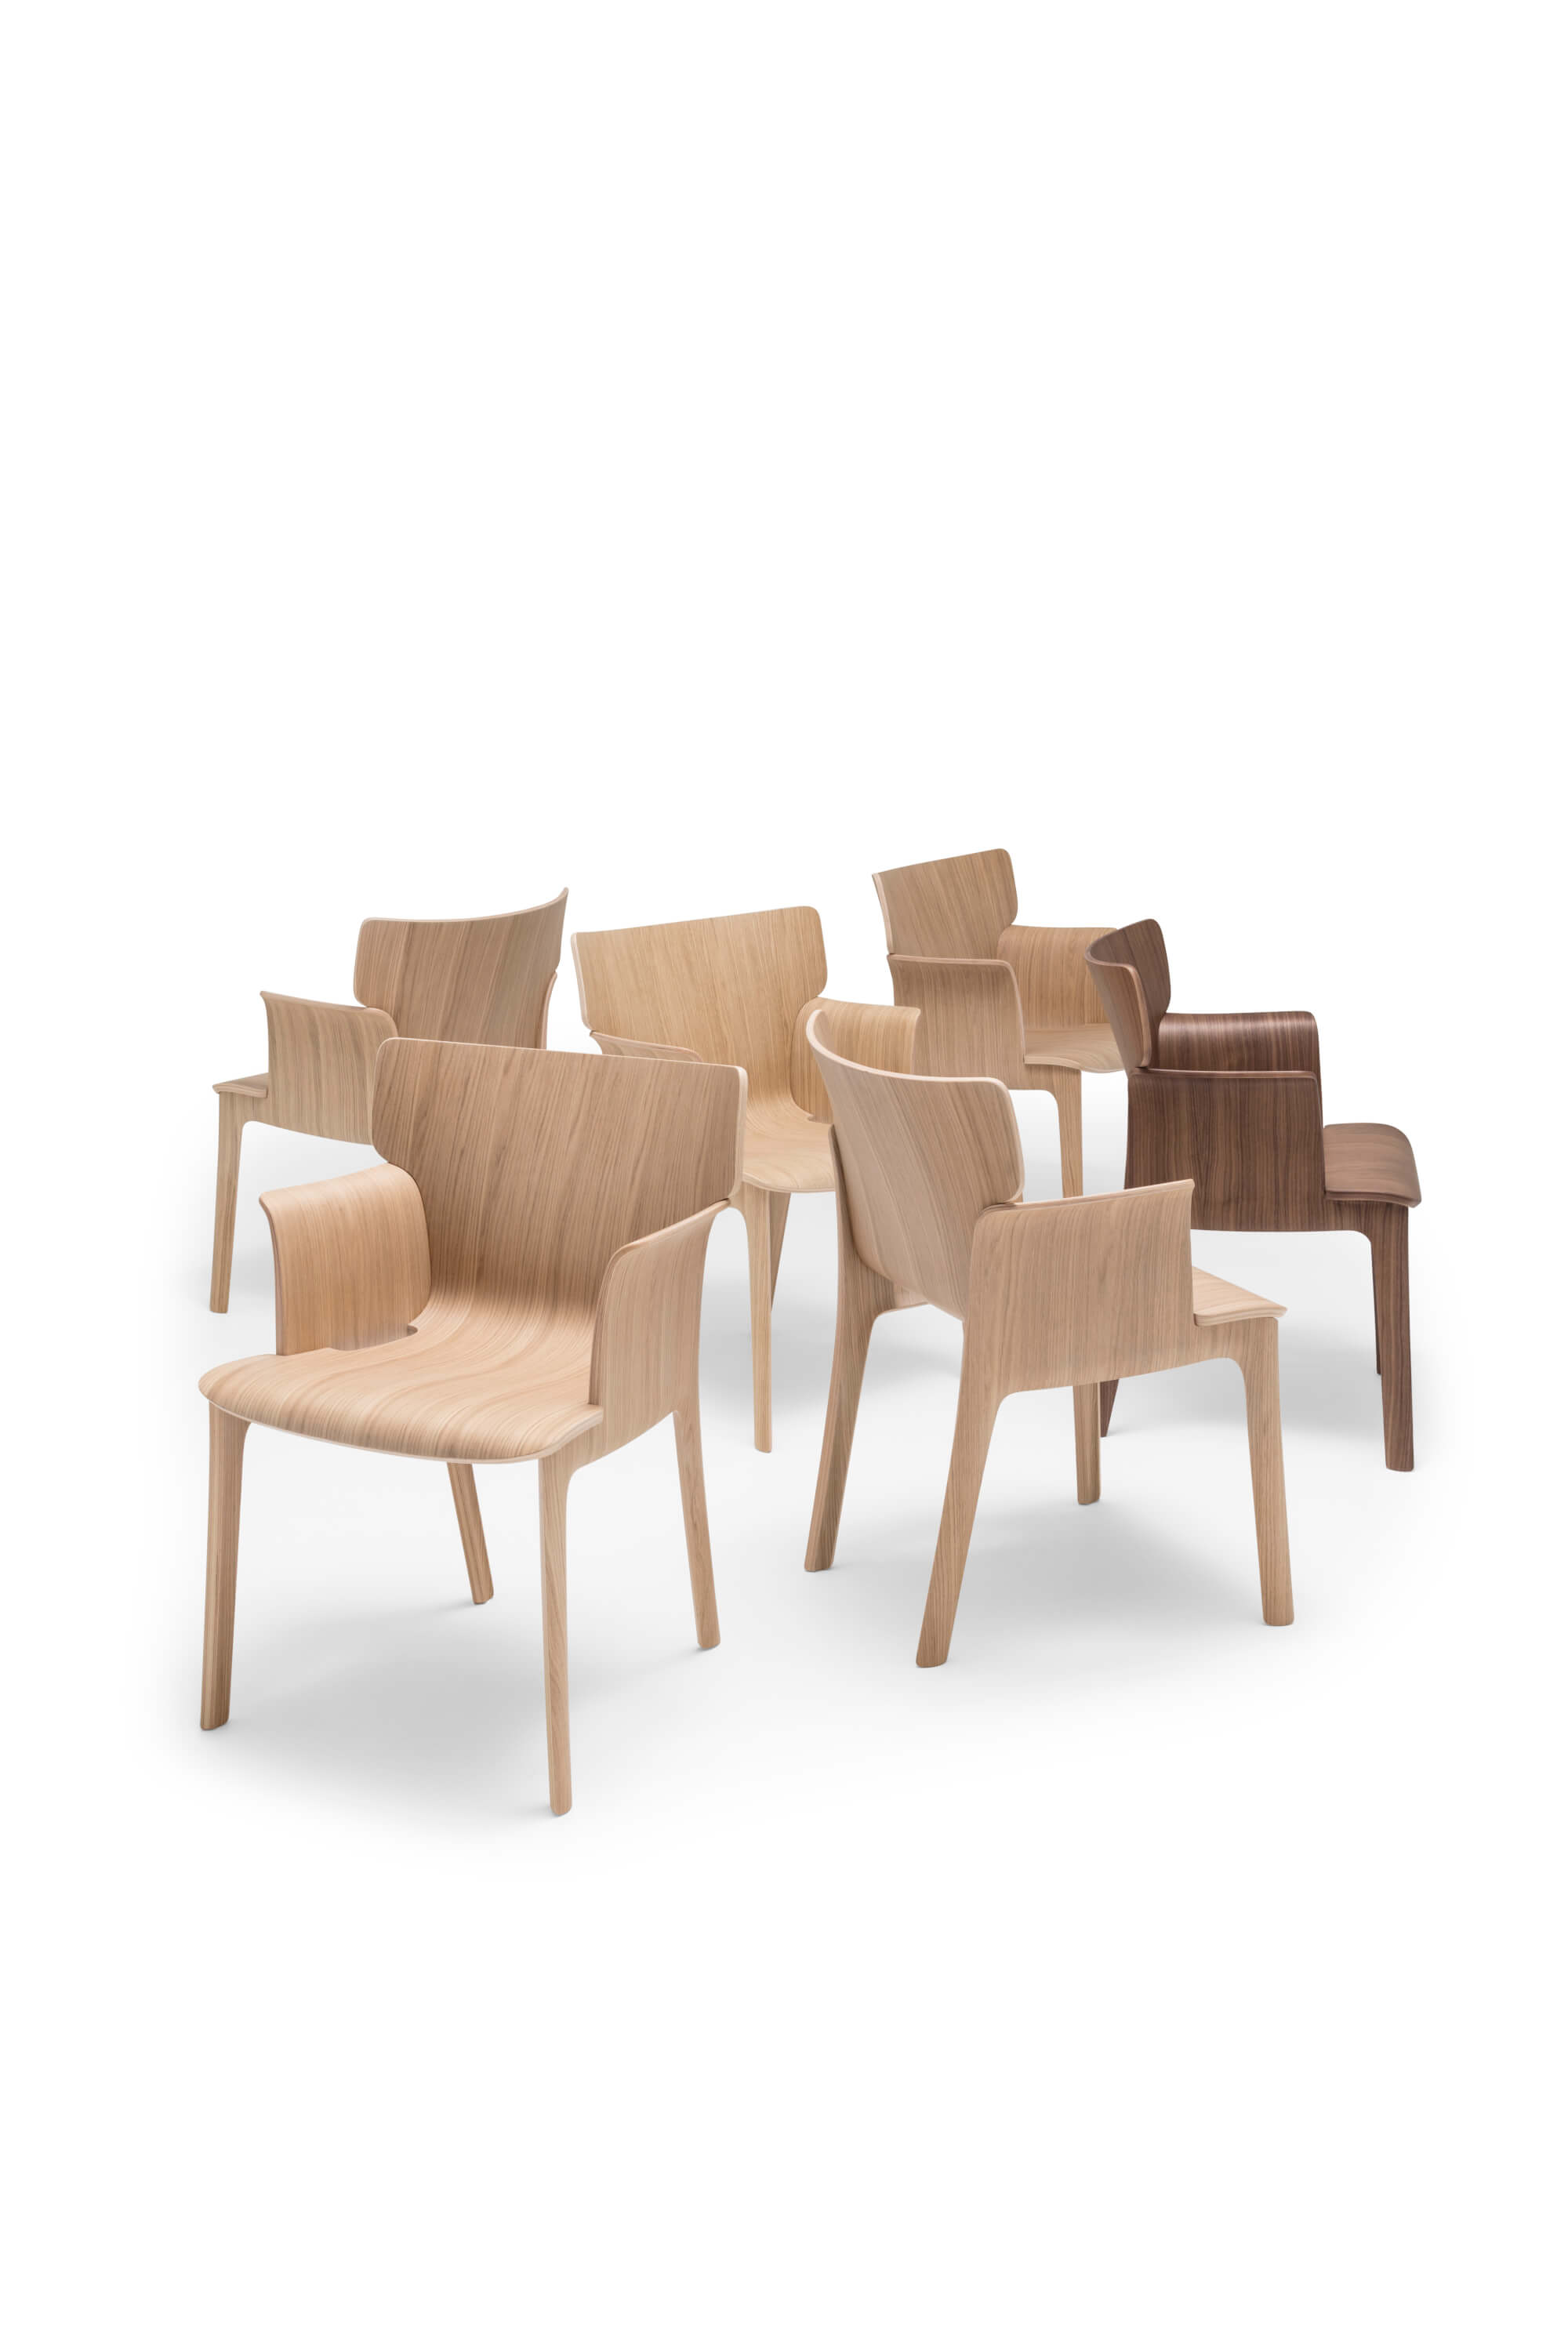 Adela Rex (Andreu World) - Chairs